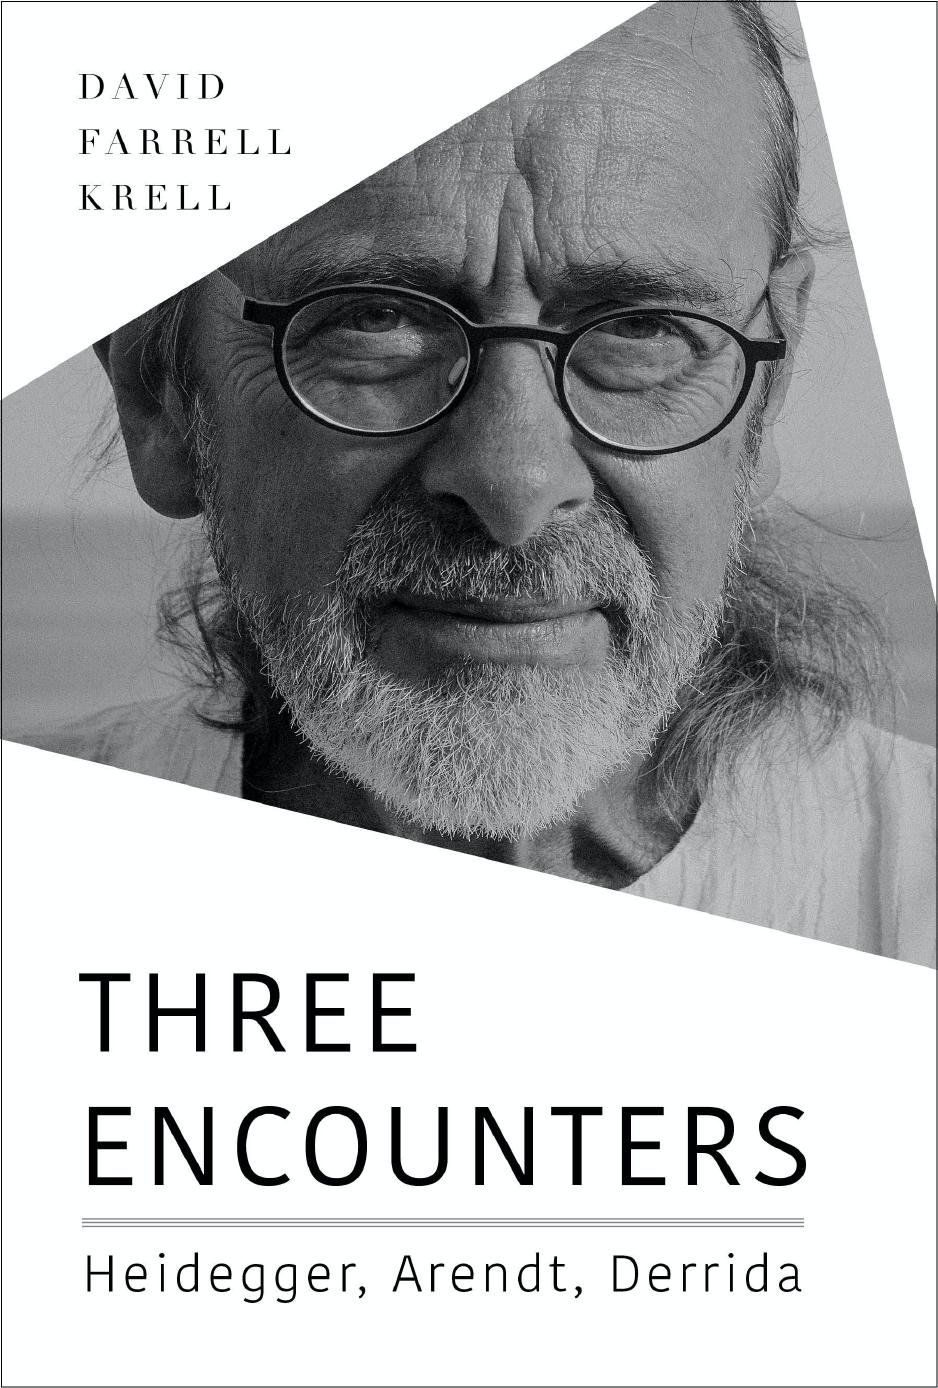 Three Encounters: Heidegger, Arendt, Derrida by David Farrell Krell